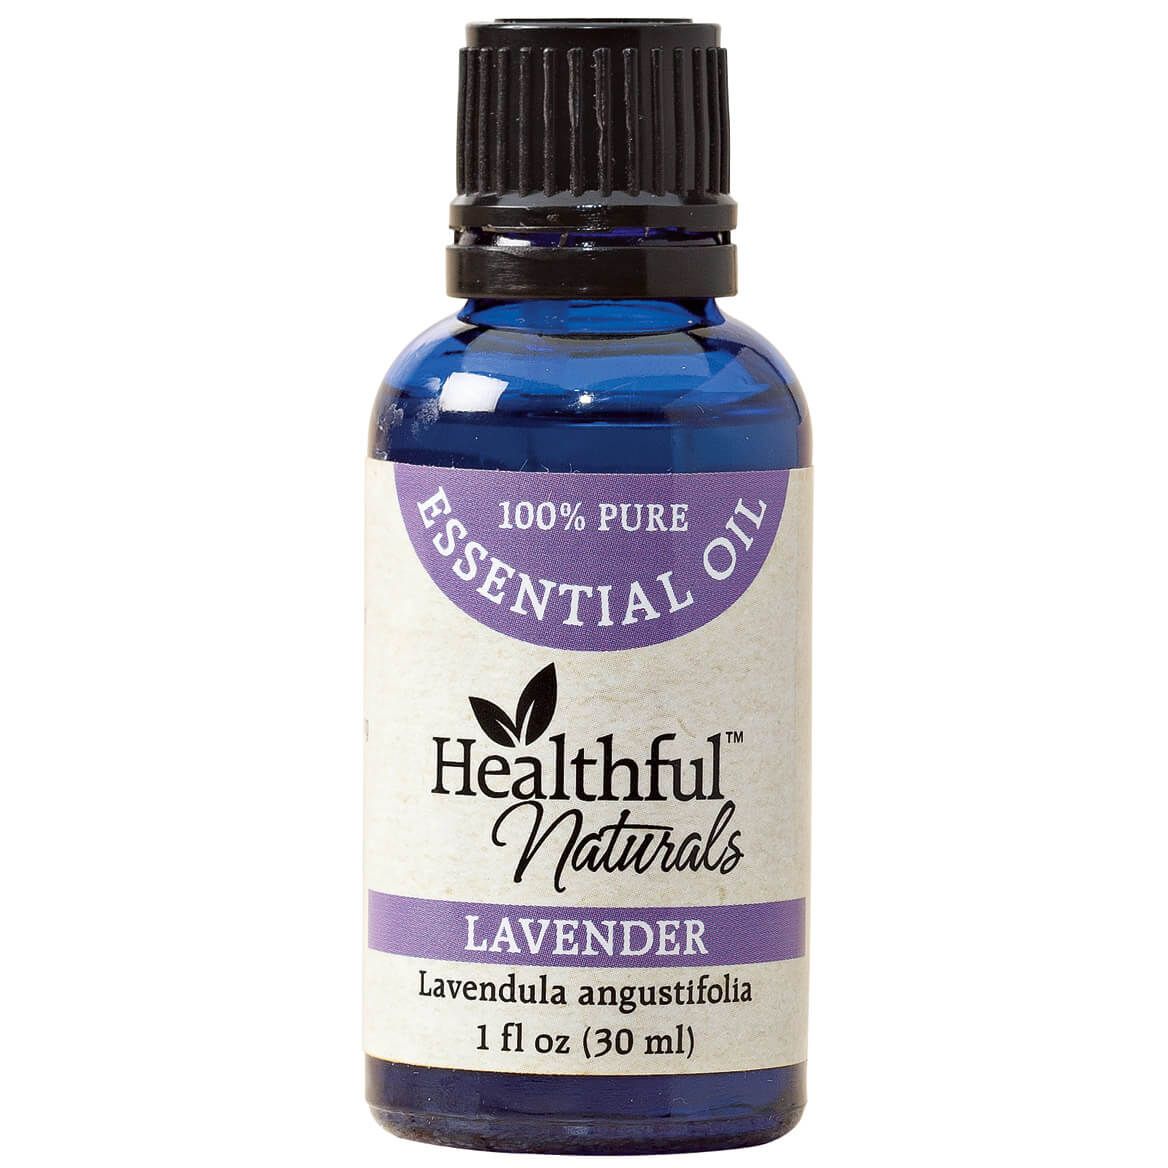 Healthful™ Naturals Lavender Essential Oil - 30 ml + '-' + 353456